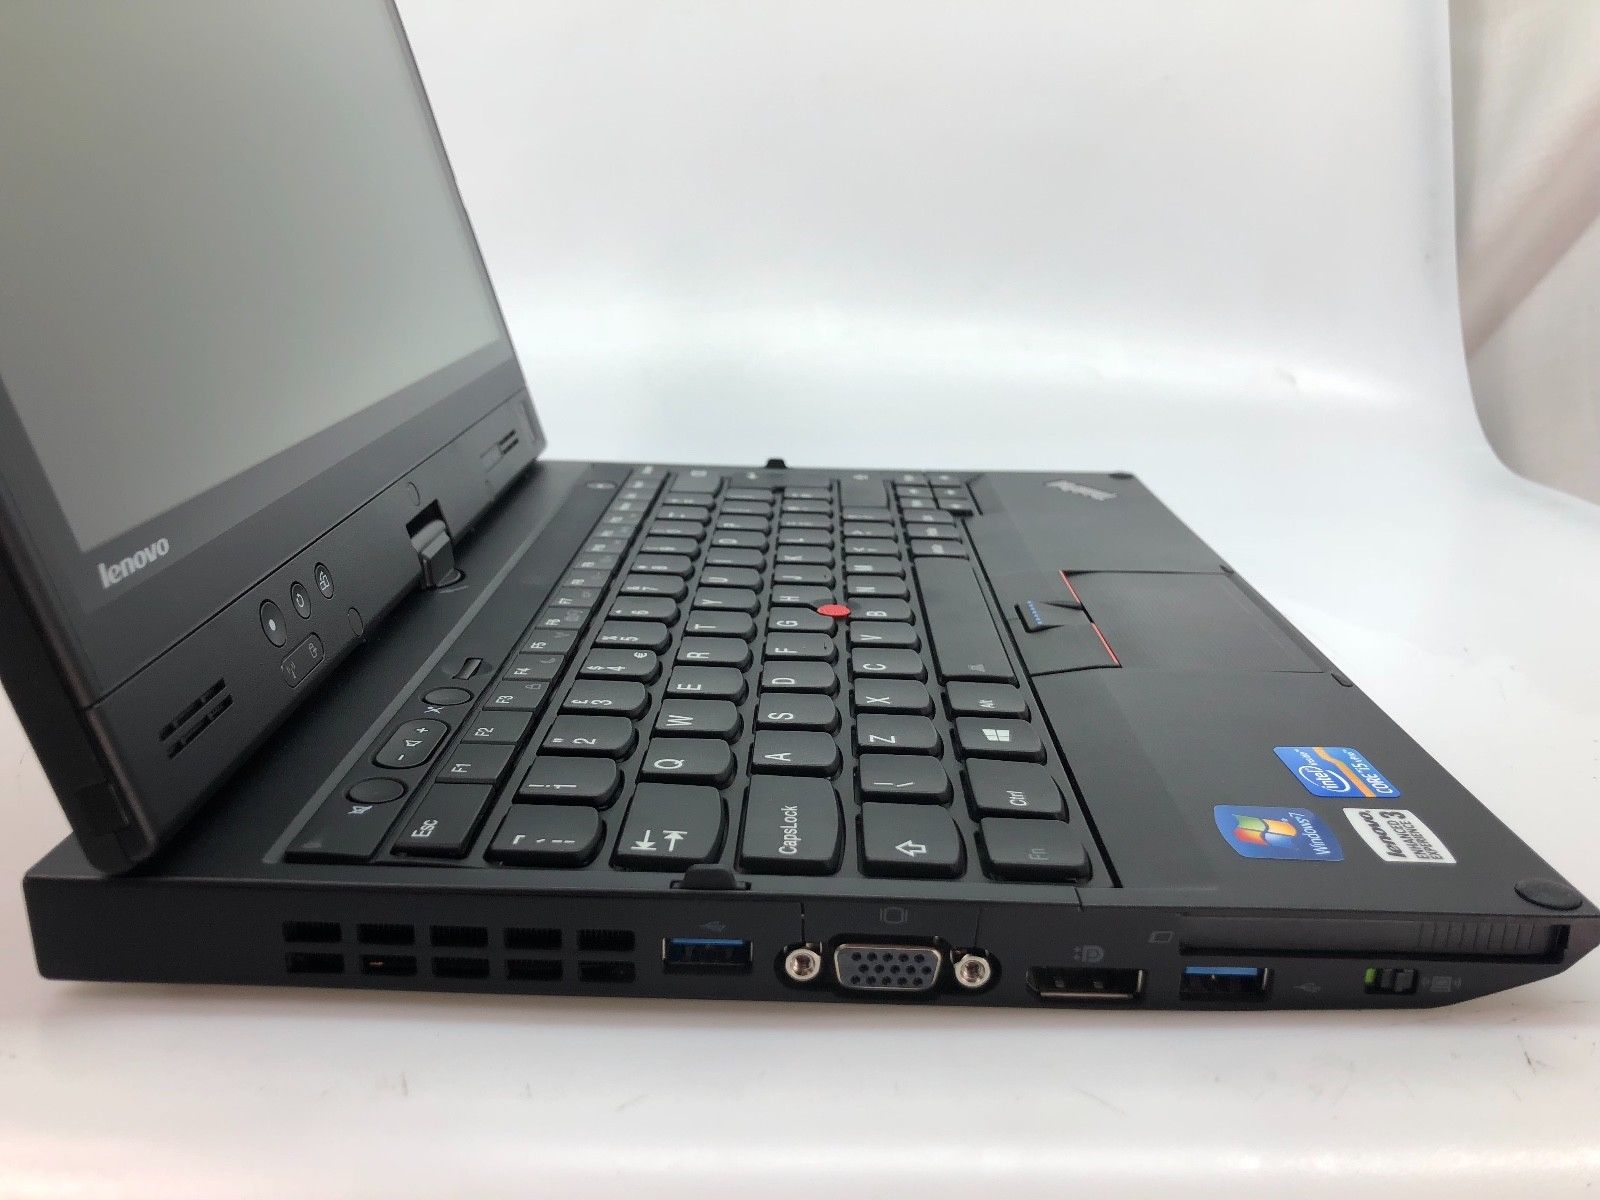 Lenovo Thinkpad X230 Tablet Laptop hybrid i5 2.6GHz 8GB 256GB SSD